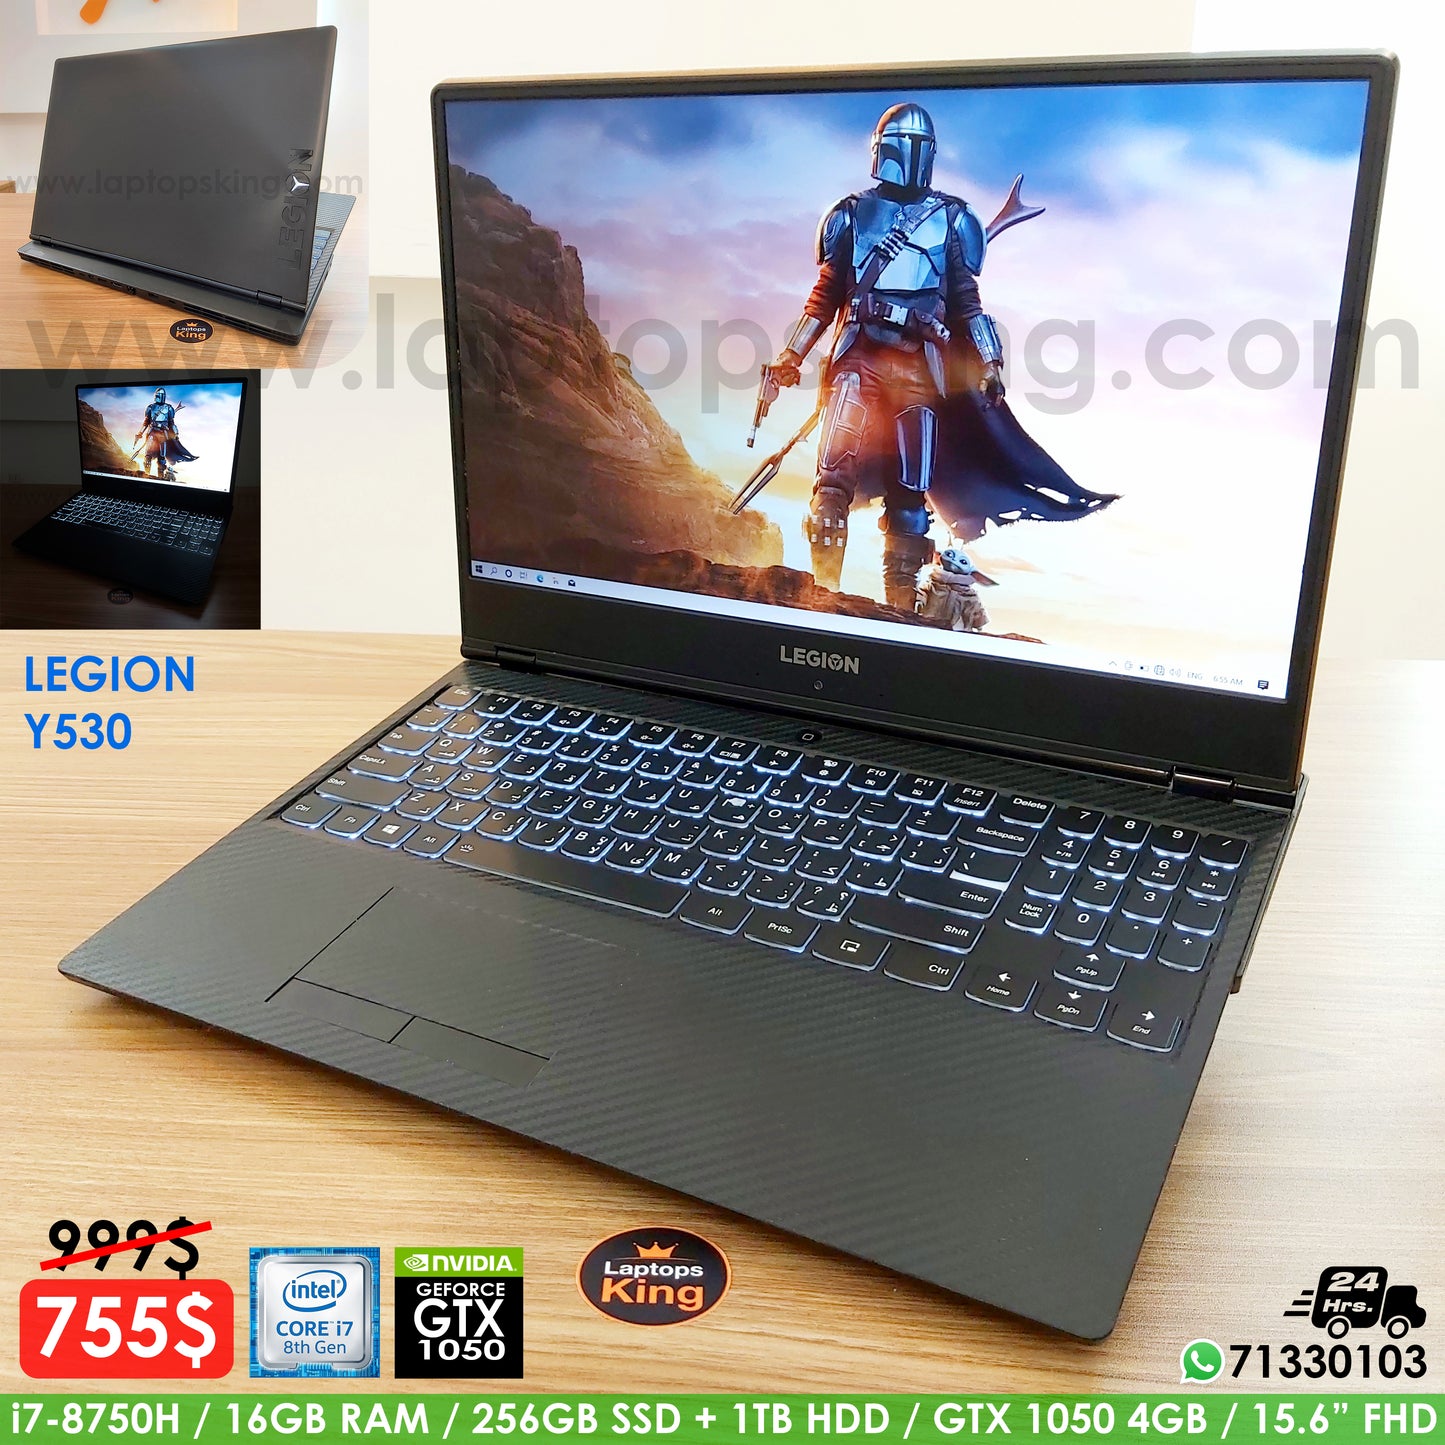 Lenovo Legion Y530 i7-8750h GTX 1050 Gaming Laptop (Used Very Clean)